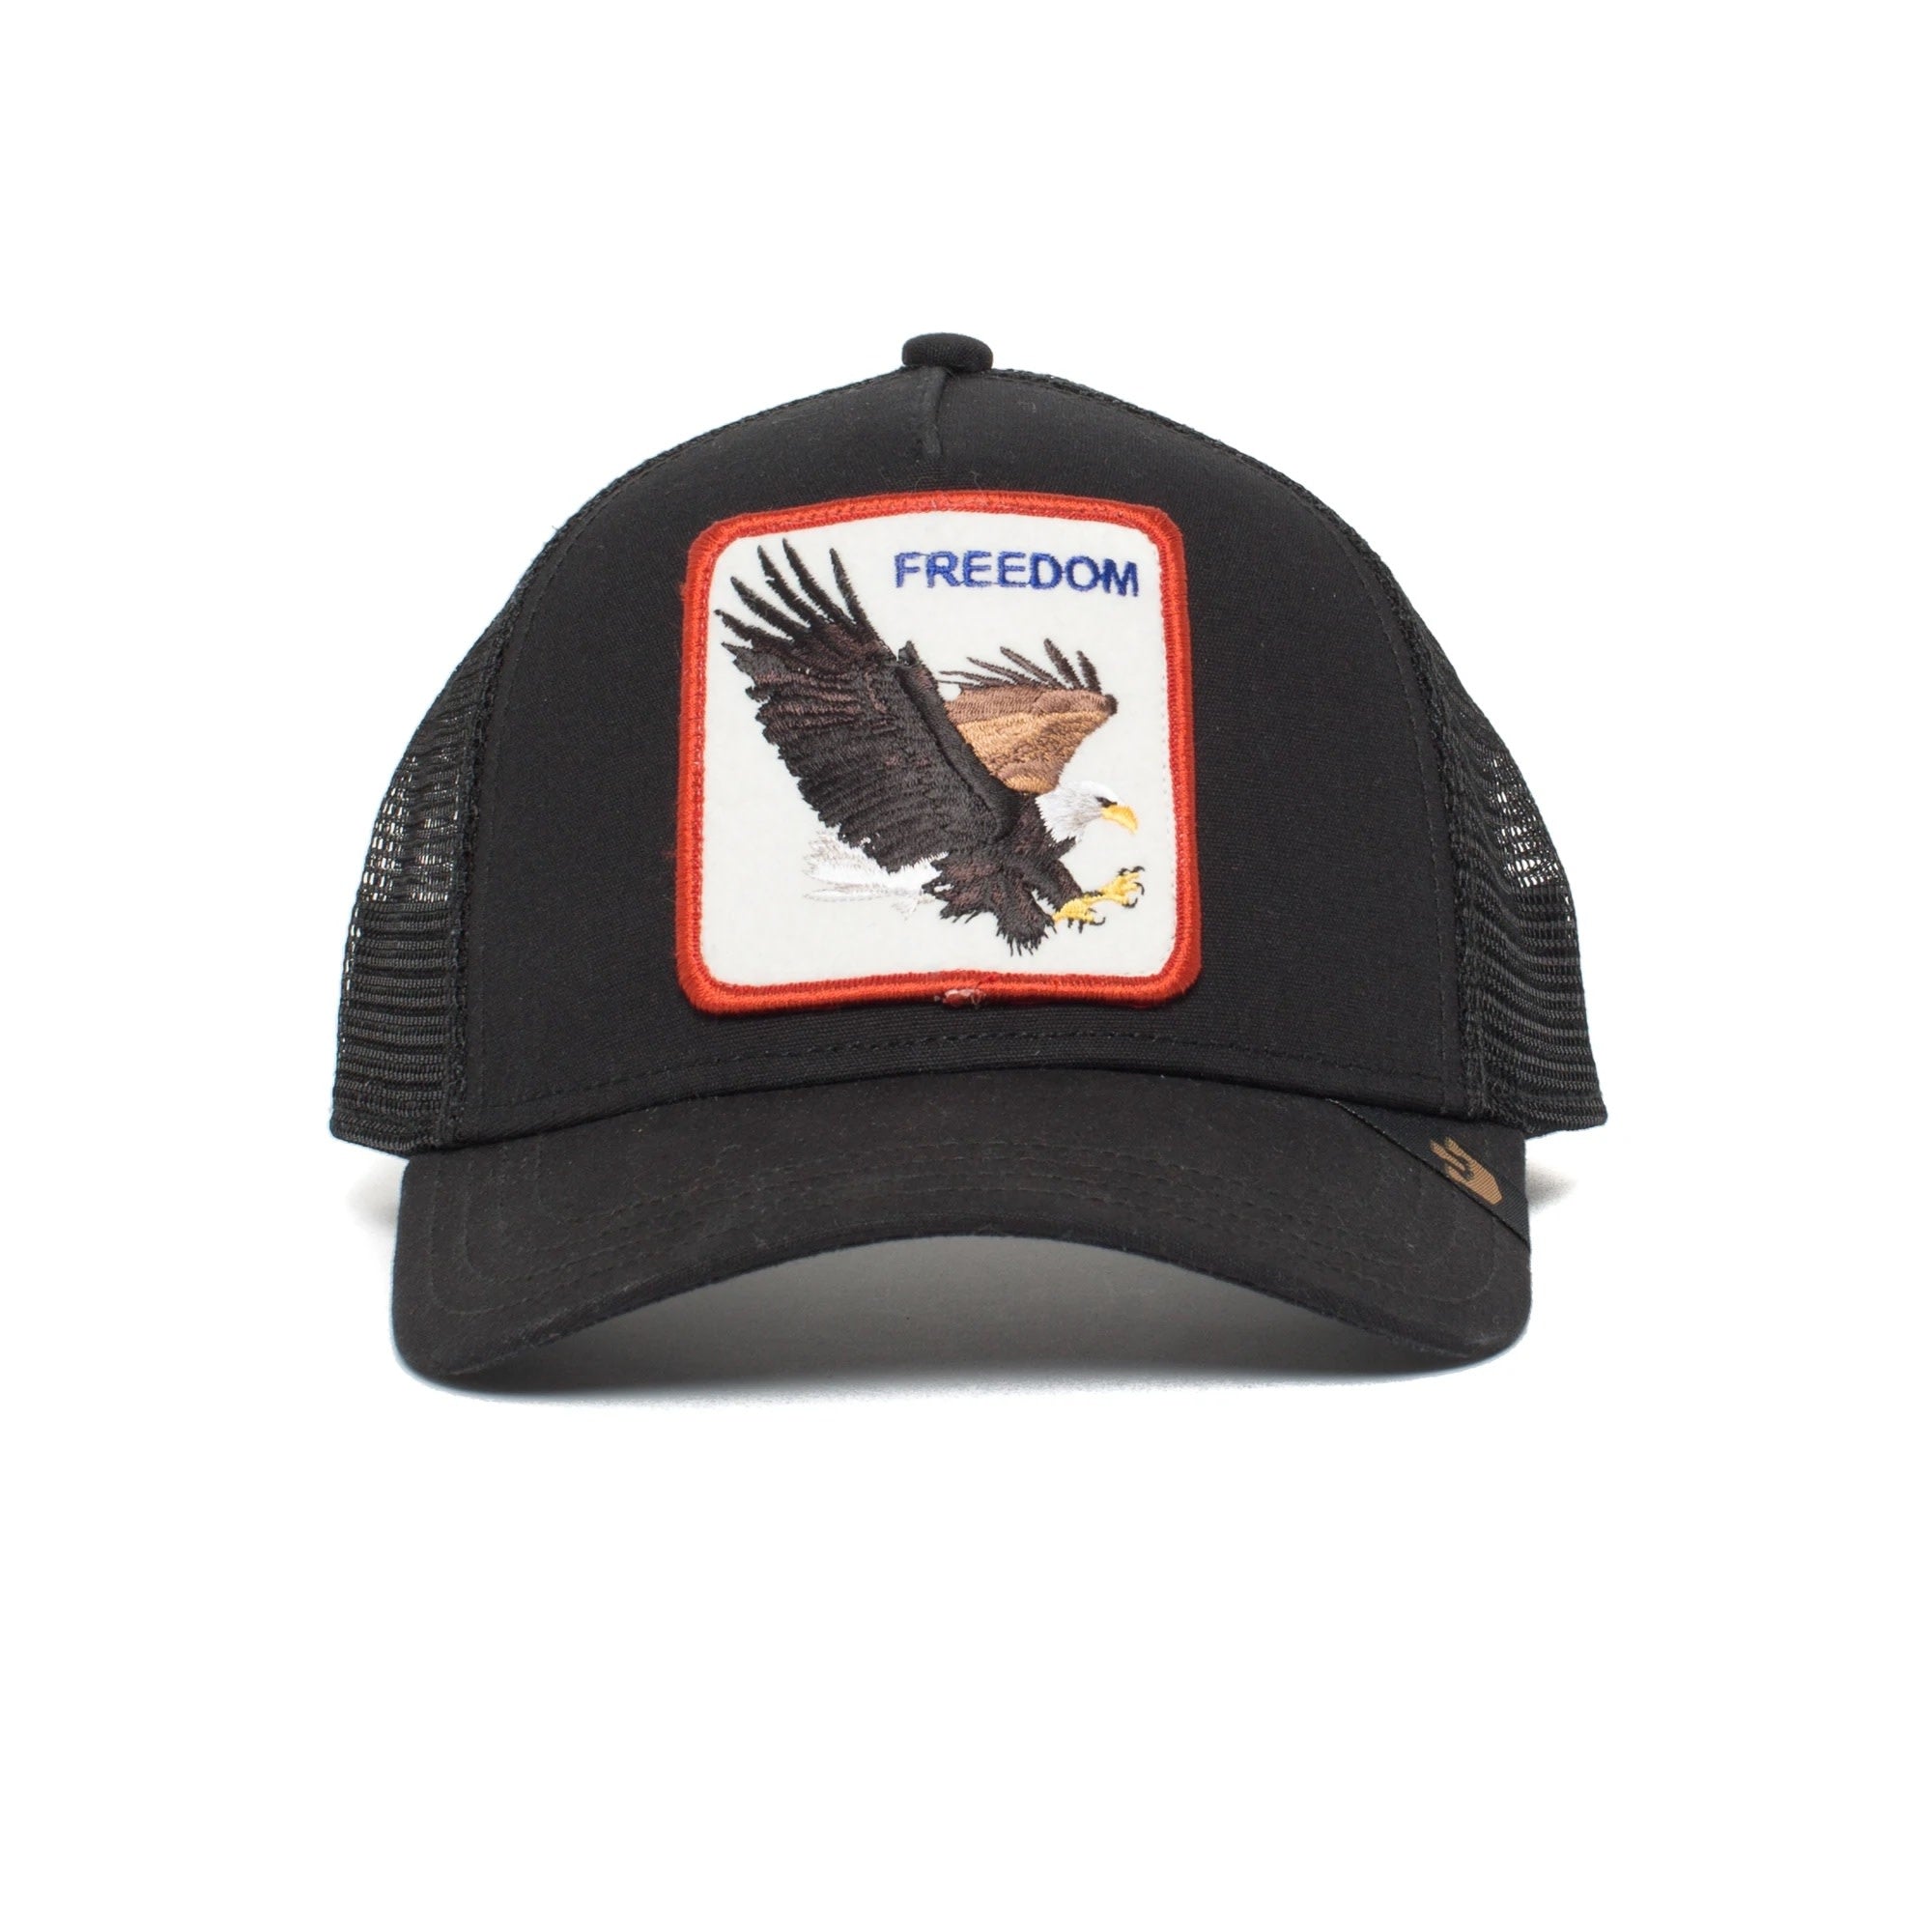 THE FREEDOM EAGLE BLACK TRUCKER HAT